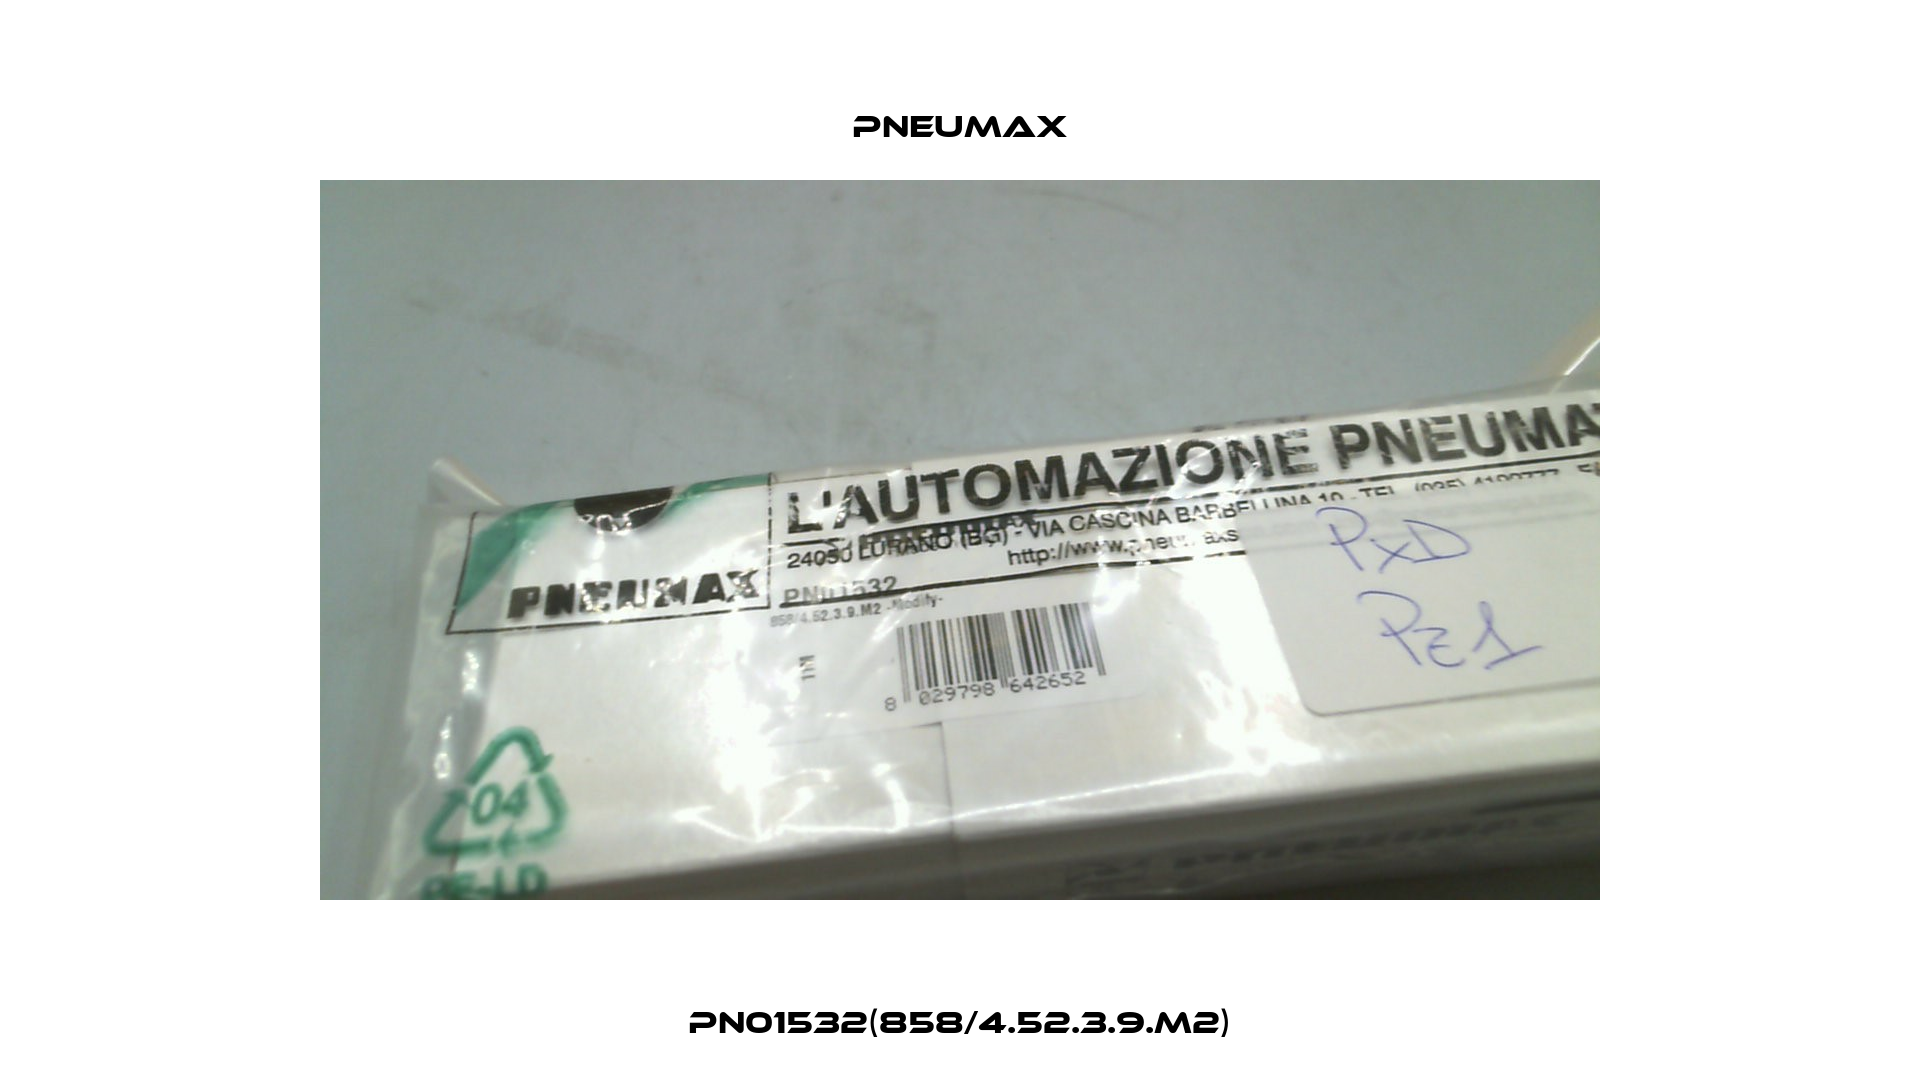 PN01532(858/4.52.3.9.M2) Pneumax